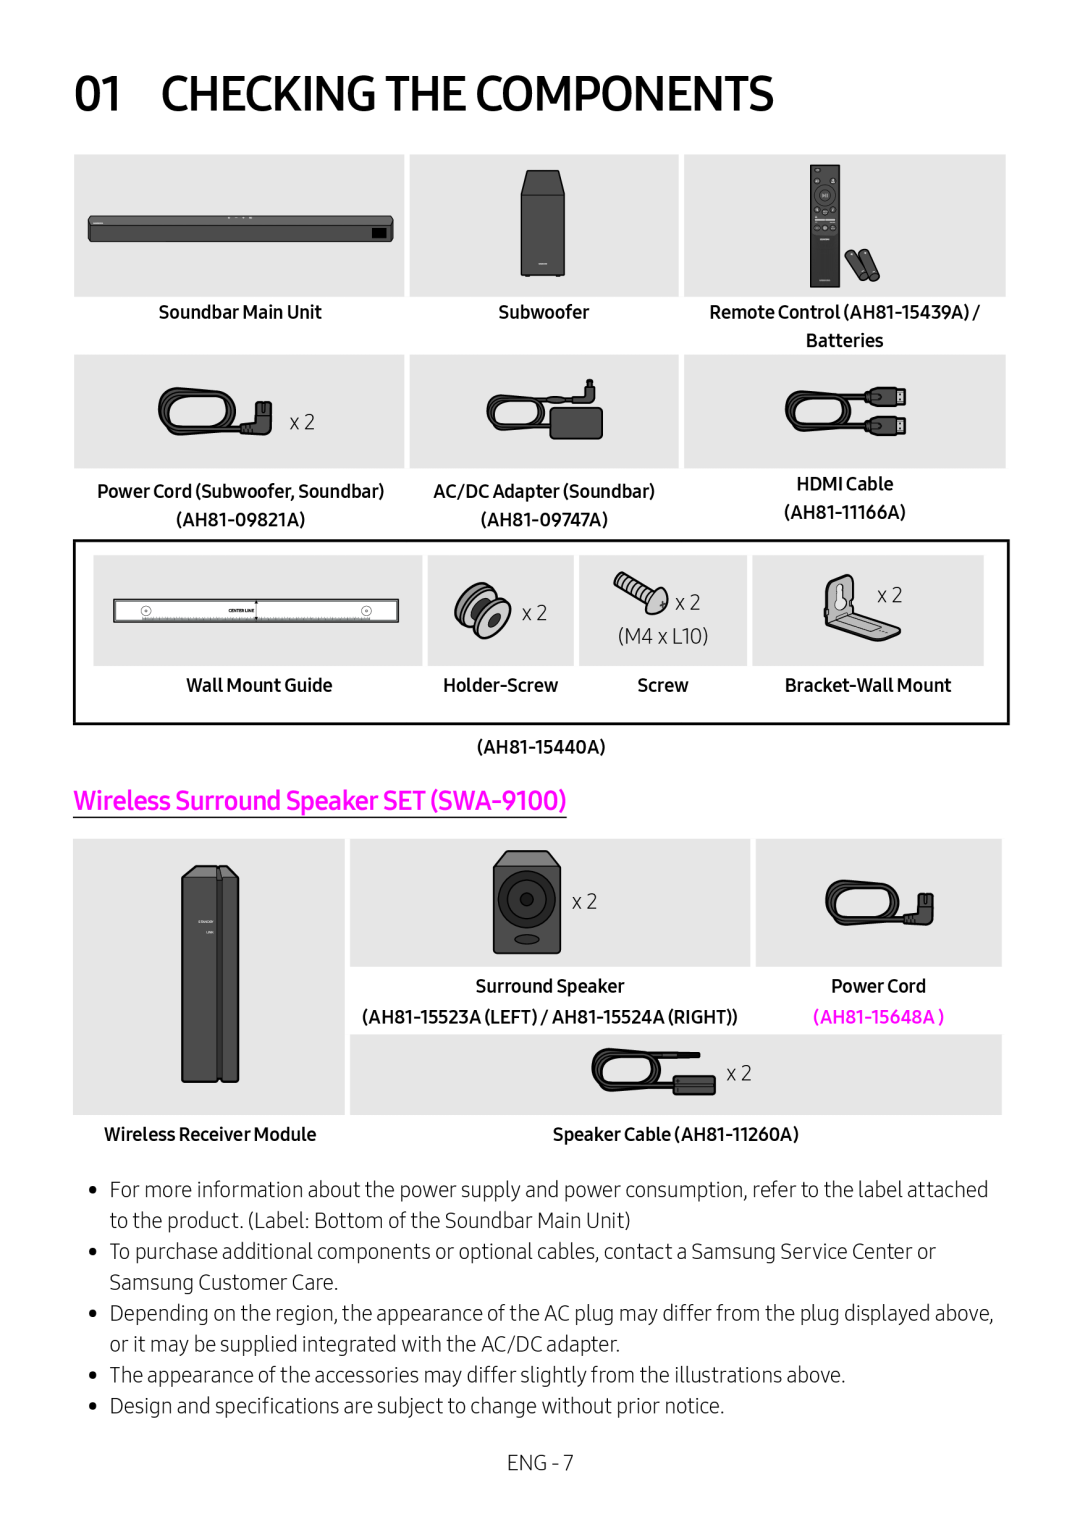 Wireless Surround Speaker SET (SWA-9100) Standard HW-B57C